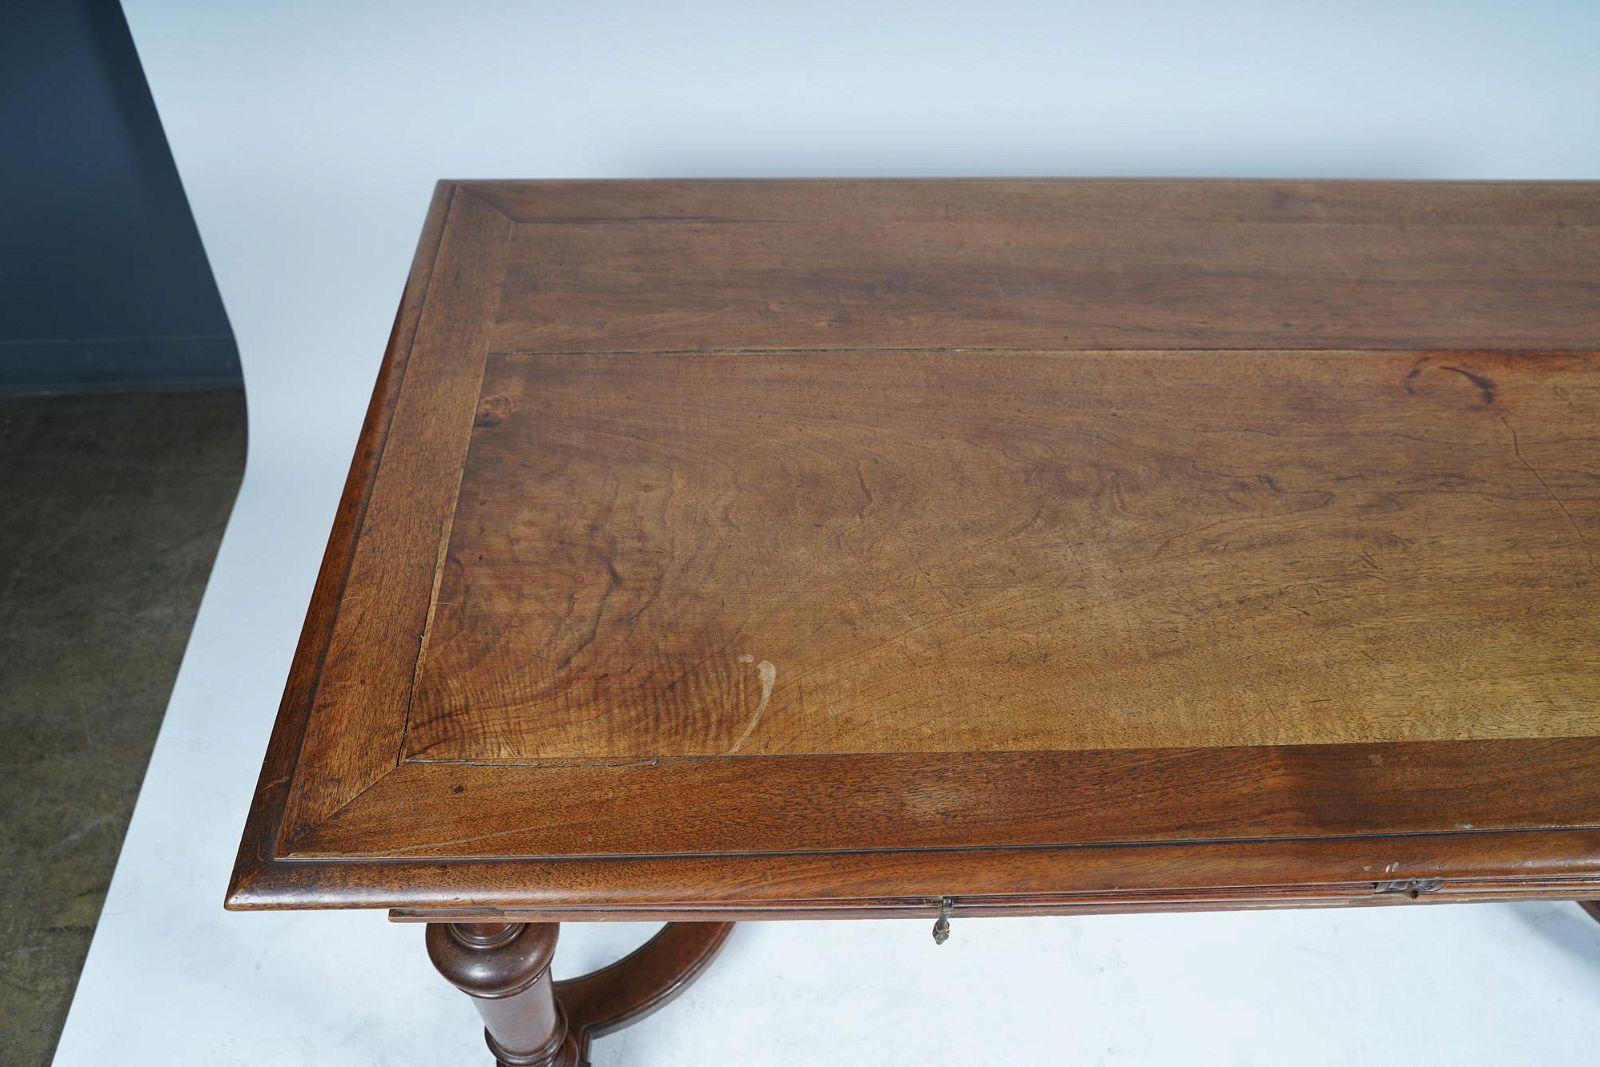 Antique American Renaissance Revival Walnut Library Table Desk Mid 19th Century For Sale 2